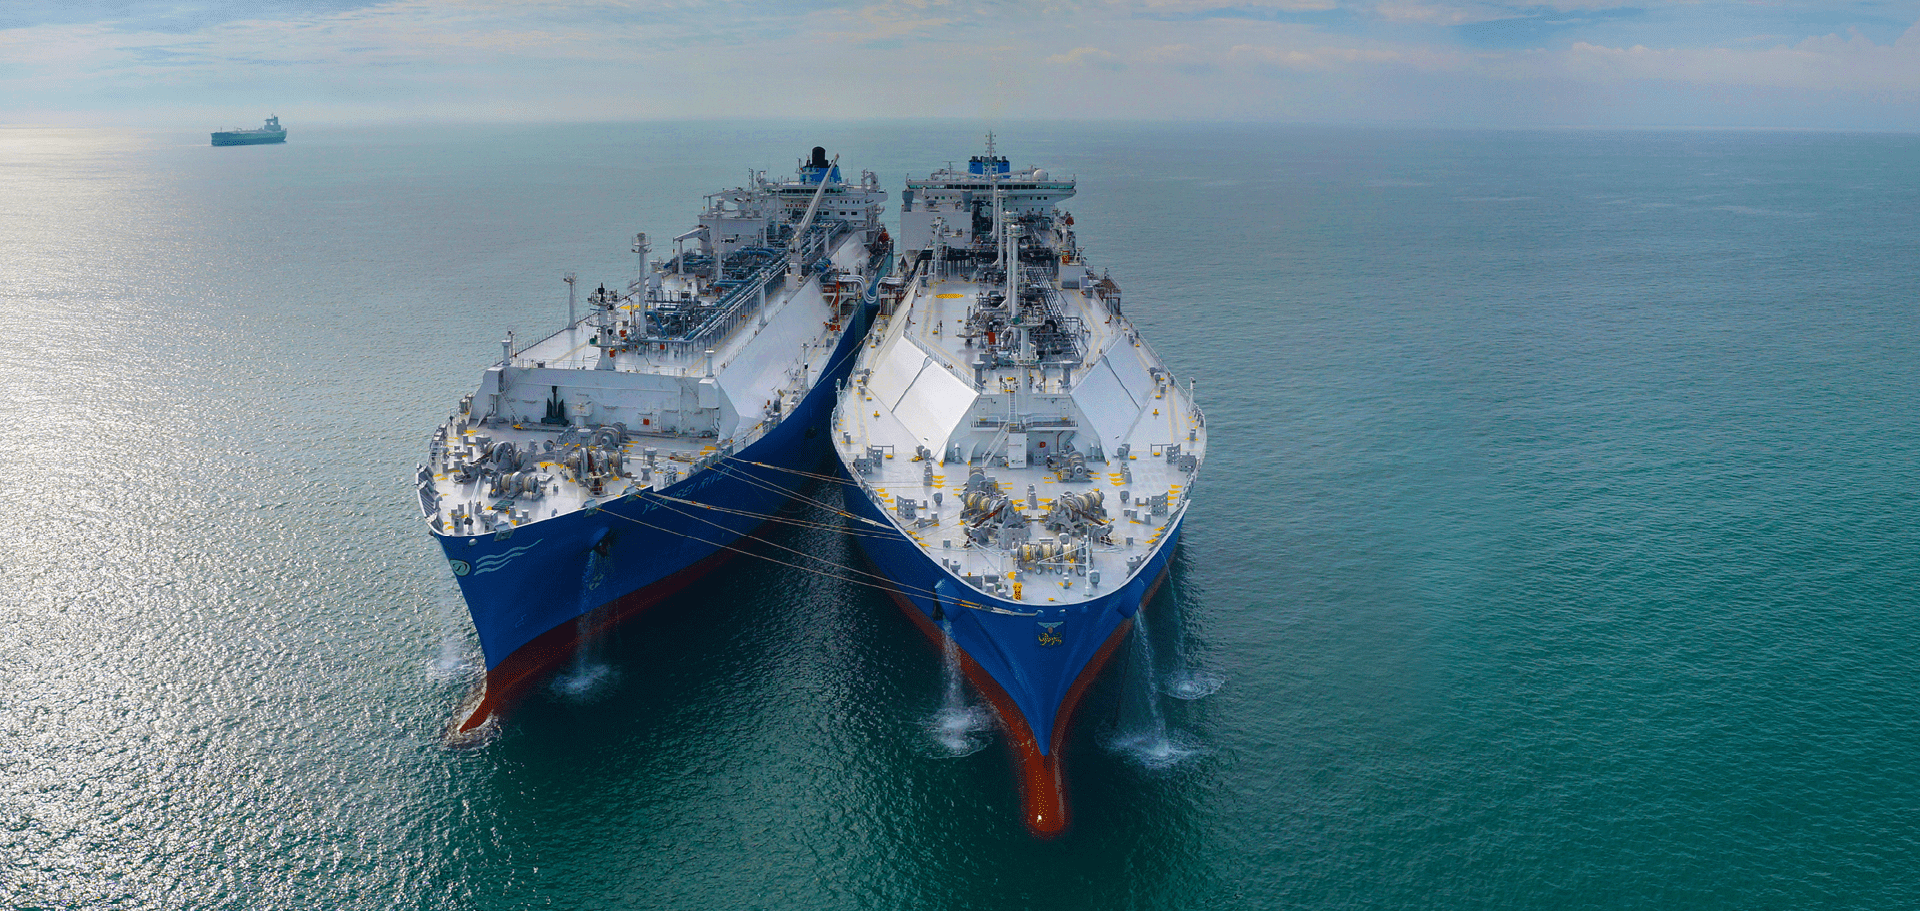 The LNG carrier Pskov